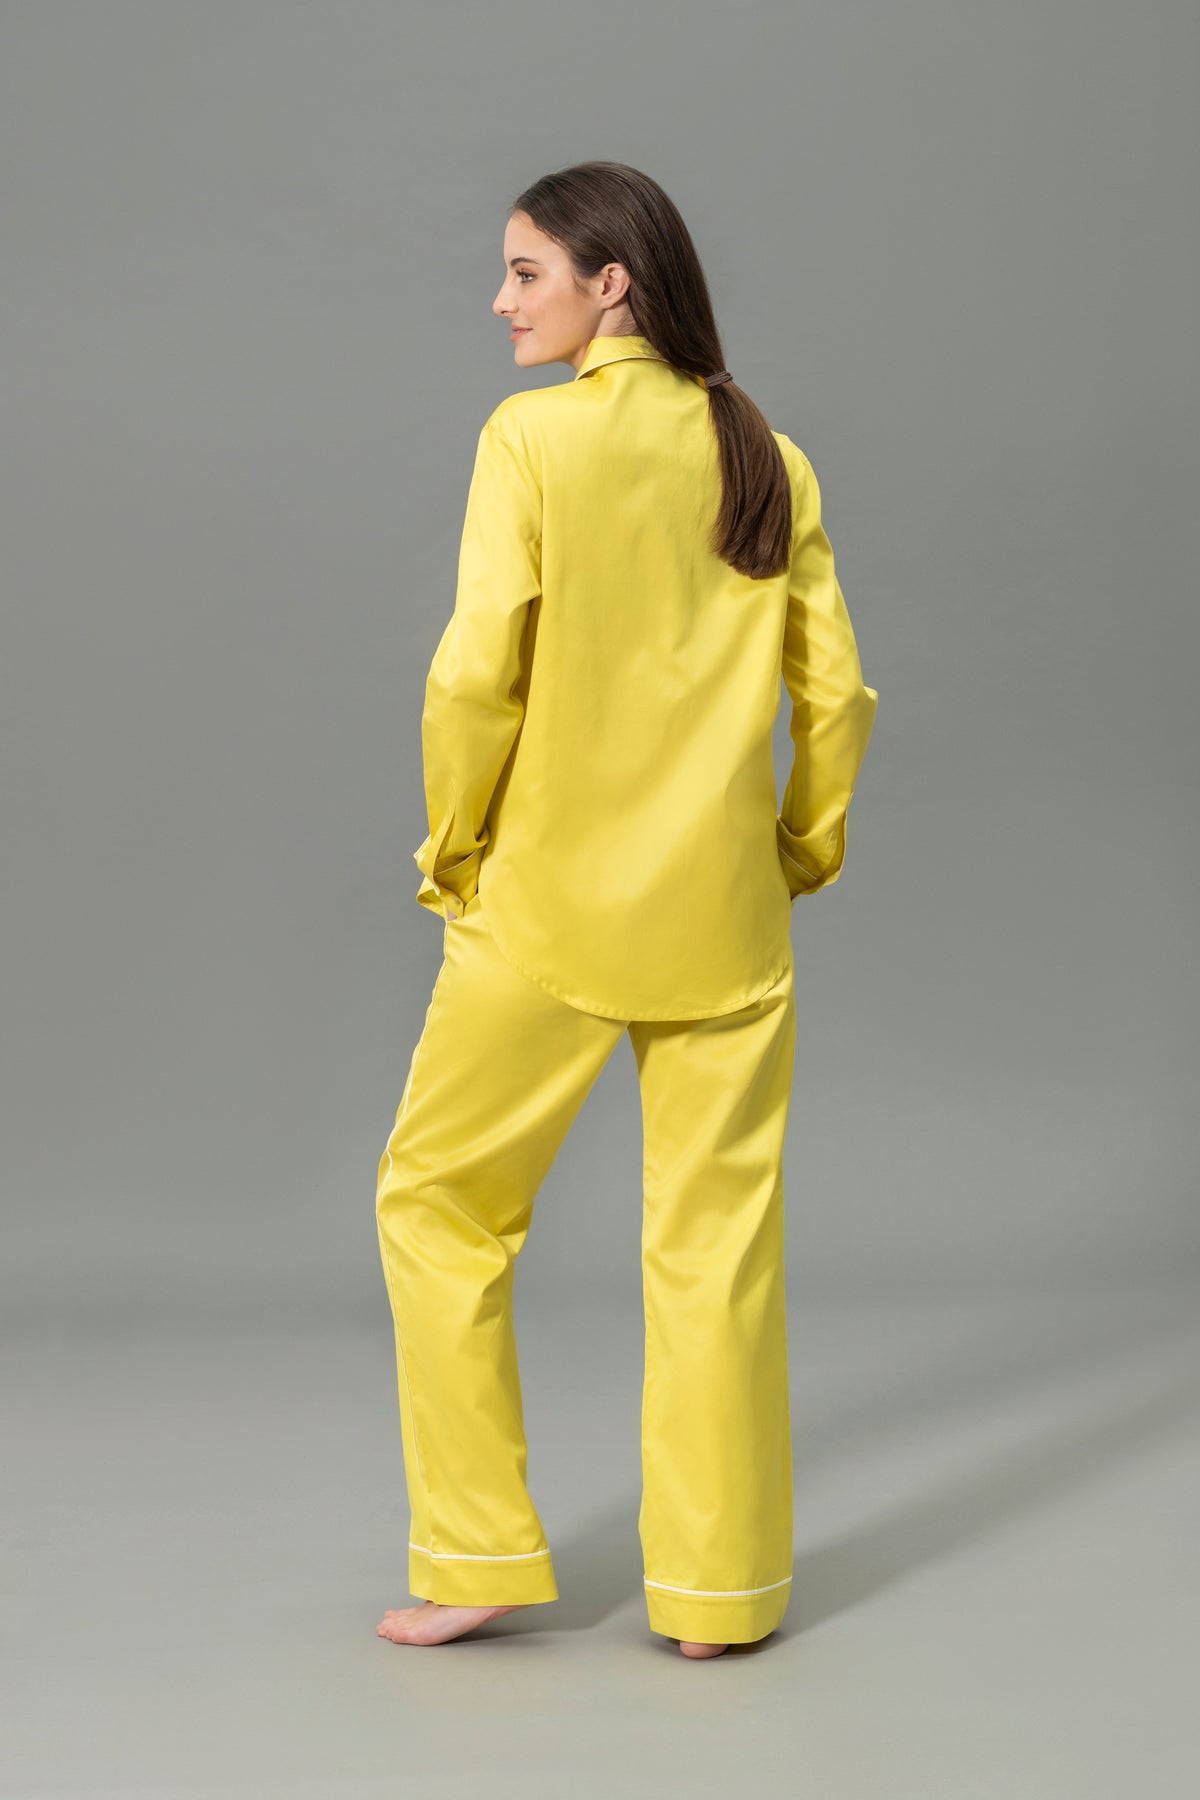 Back View of Model Wearing Matouk Nocturne Pajama Set in Color Lemon and Bone